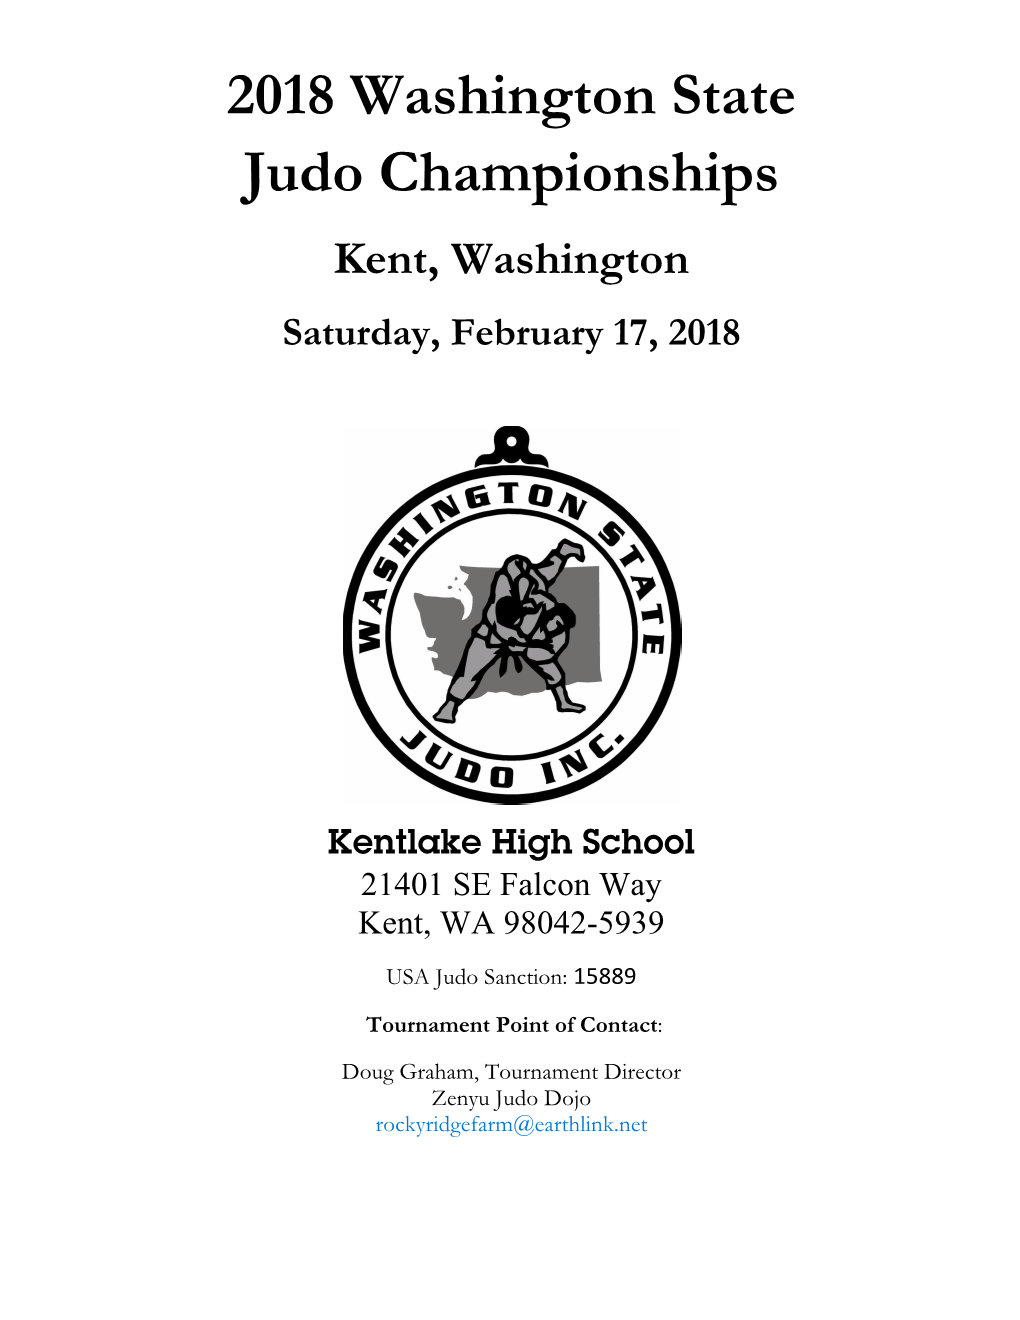 2018 Washington State Judo Championships Kent, Washington Saturday, February 17, 2018